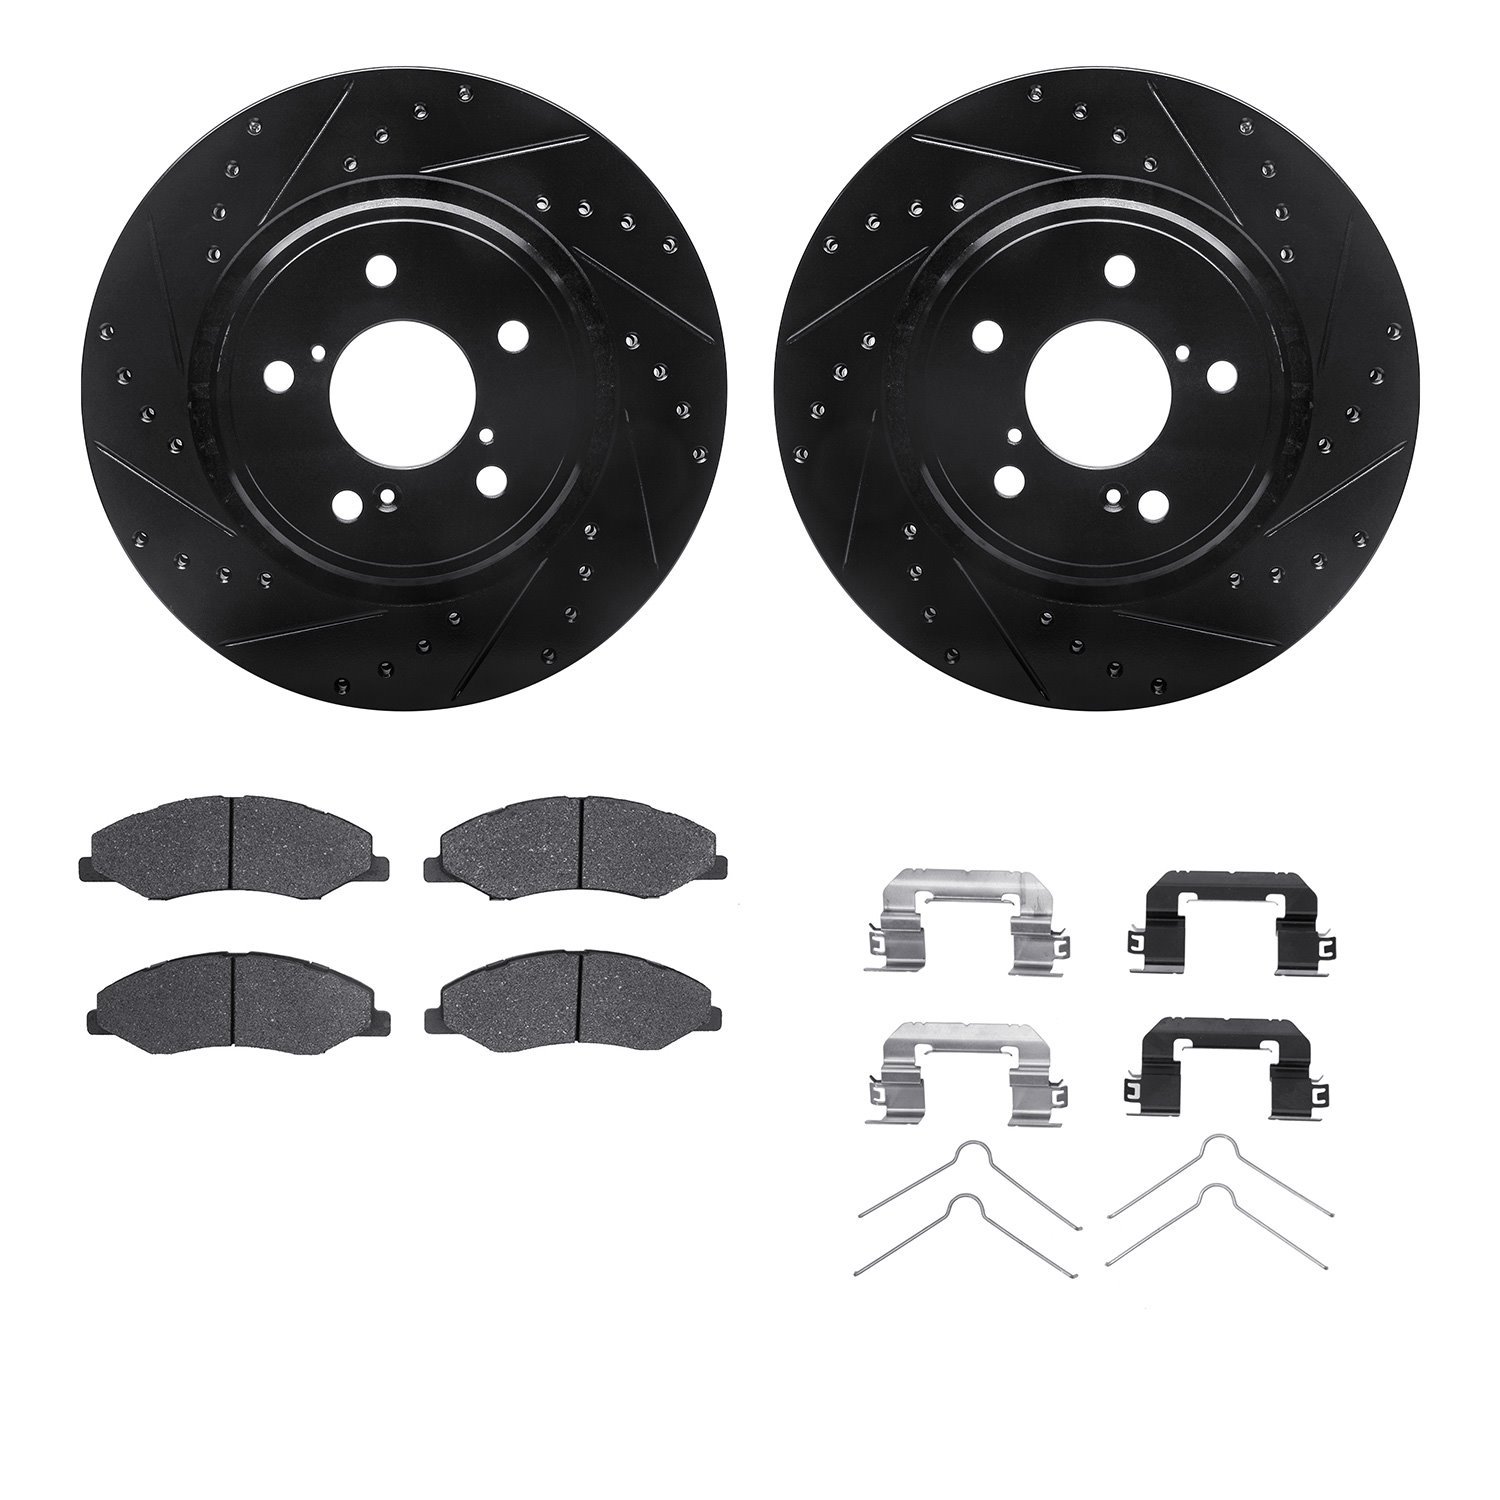 8312-59113 Drilled/Slotted Brake Rotors with 3000-Series Ceramic Brake Pads Kit & Hardware [Black], Fits Select Acura/Honda, Pos